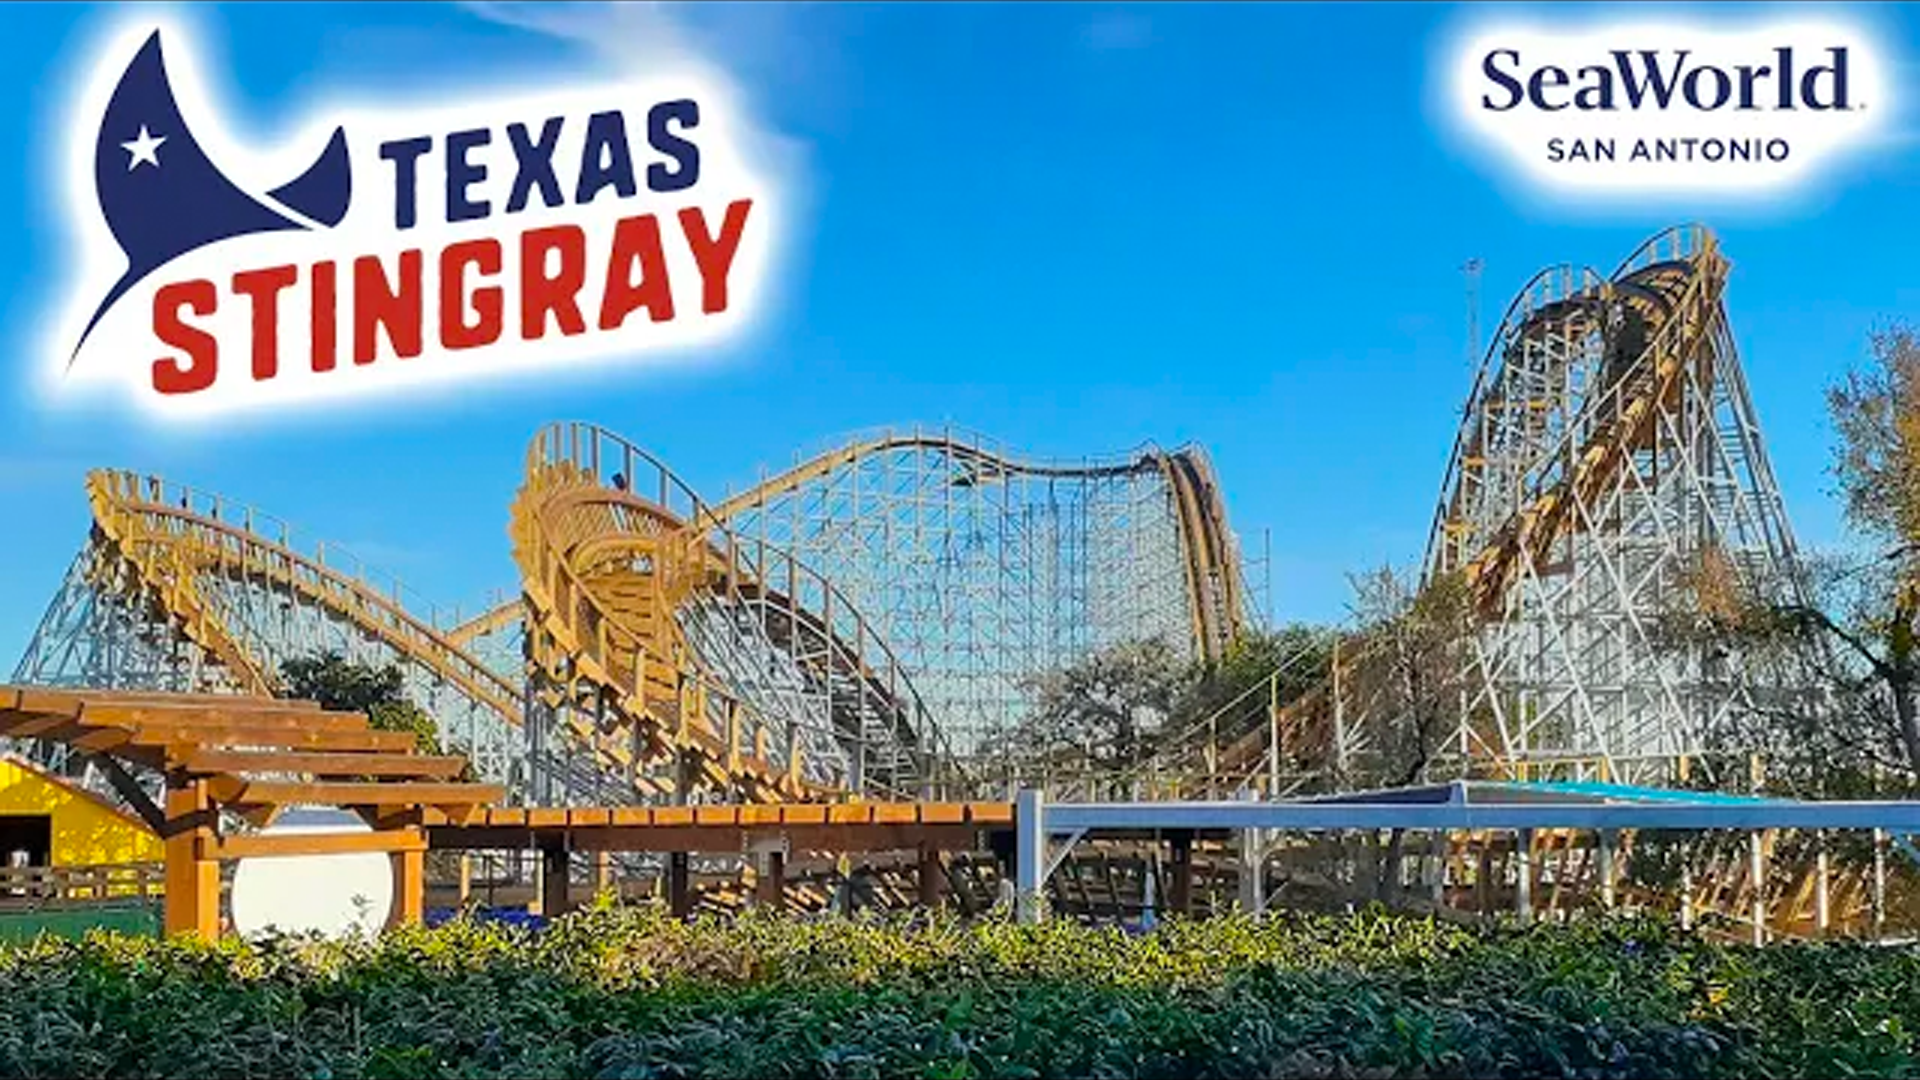 Texas Stingray – SeaWorld San Antonio's New Roller Coaster